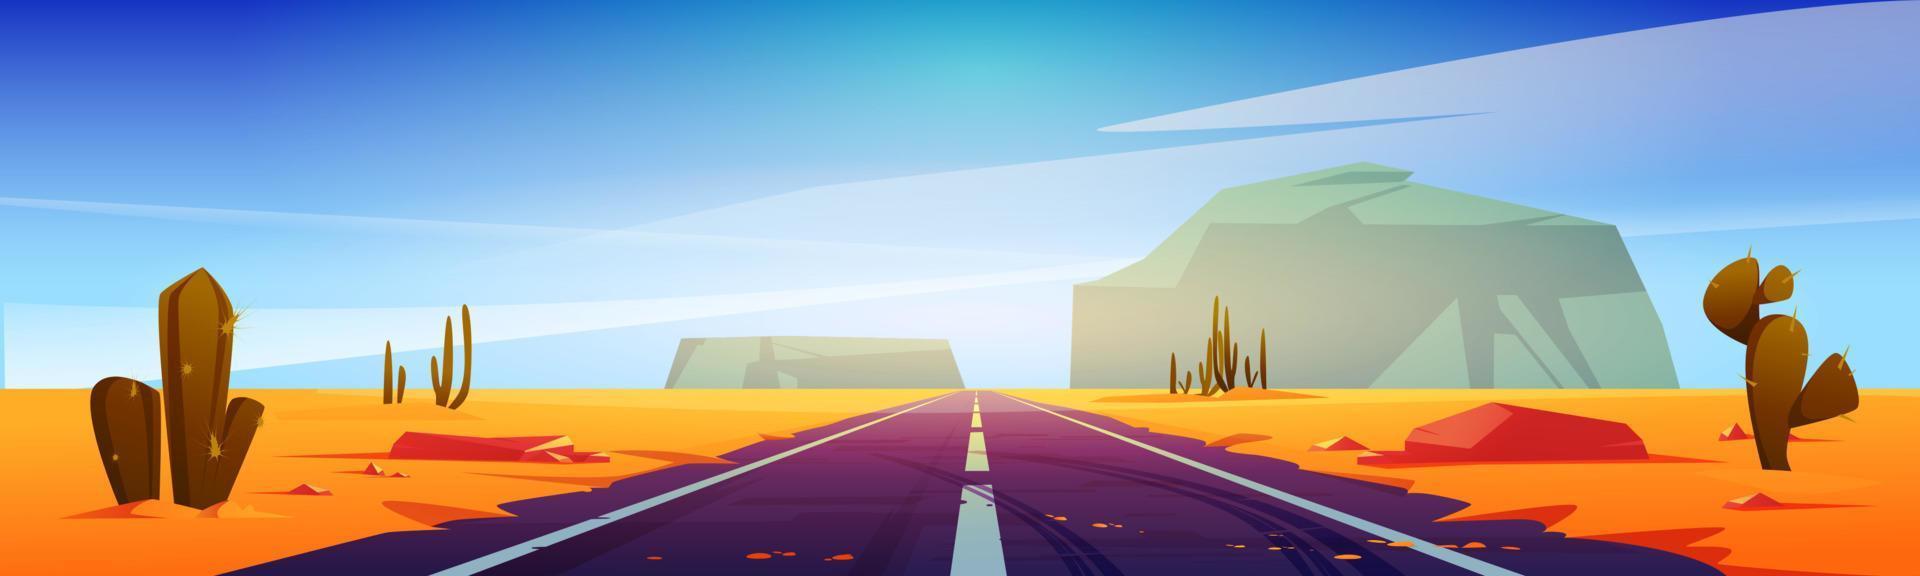 Road in desert scenery landscape with rocks vector